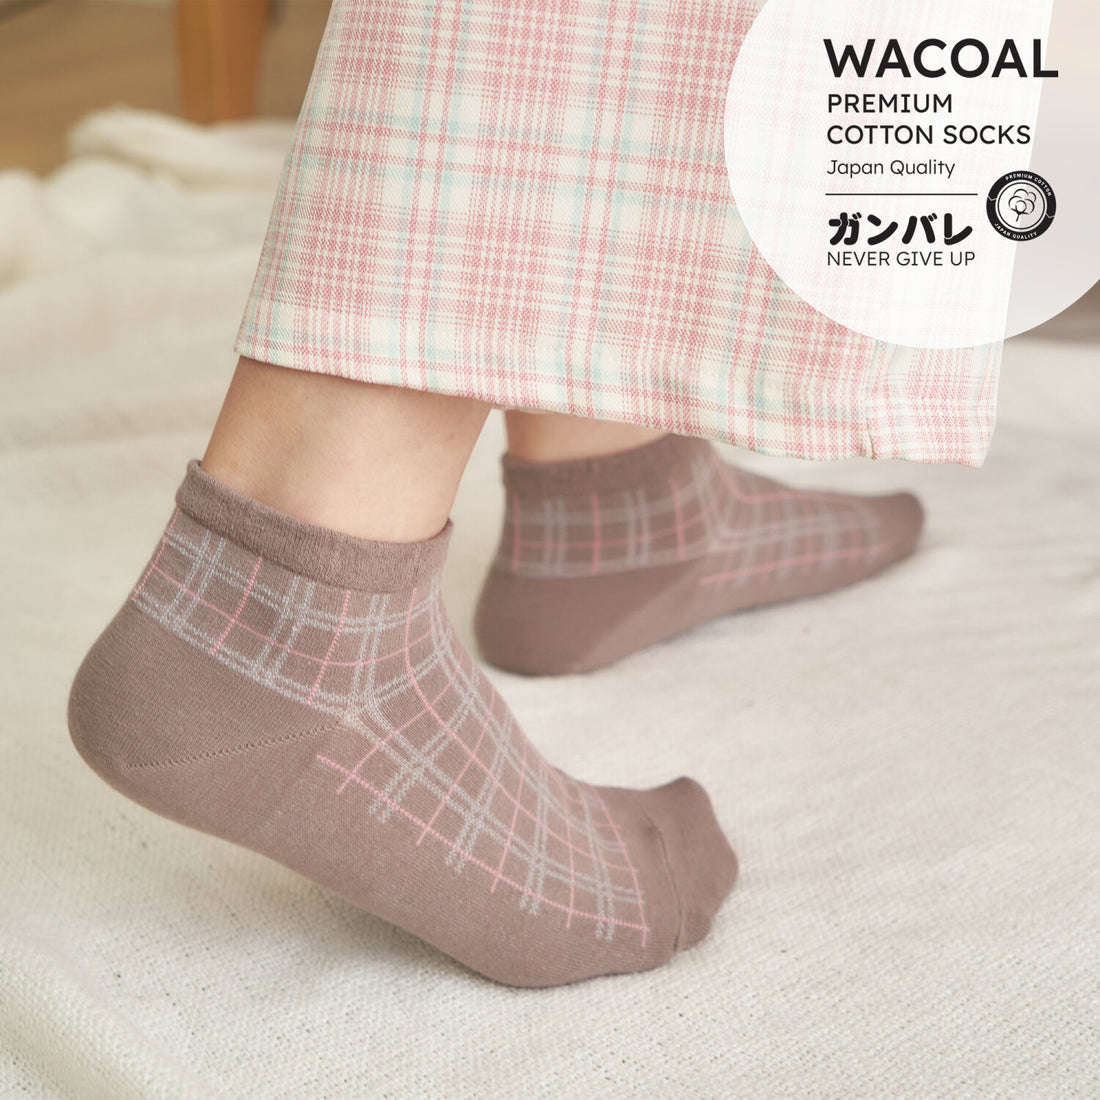 Short Socks Premium Cotton Socks Selected by Wacoal model WW110300 Ovaltine (OT)